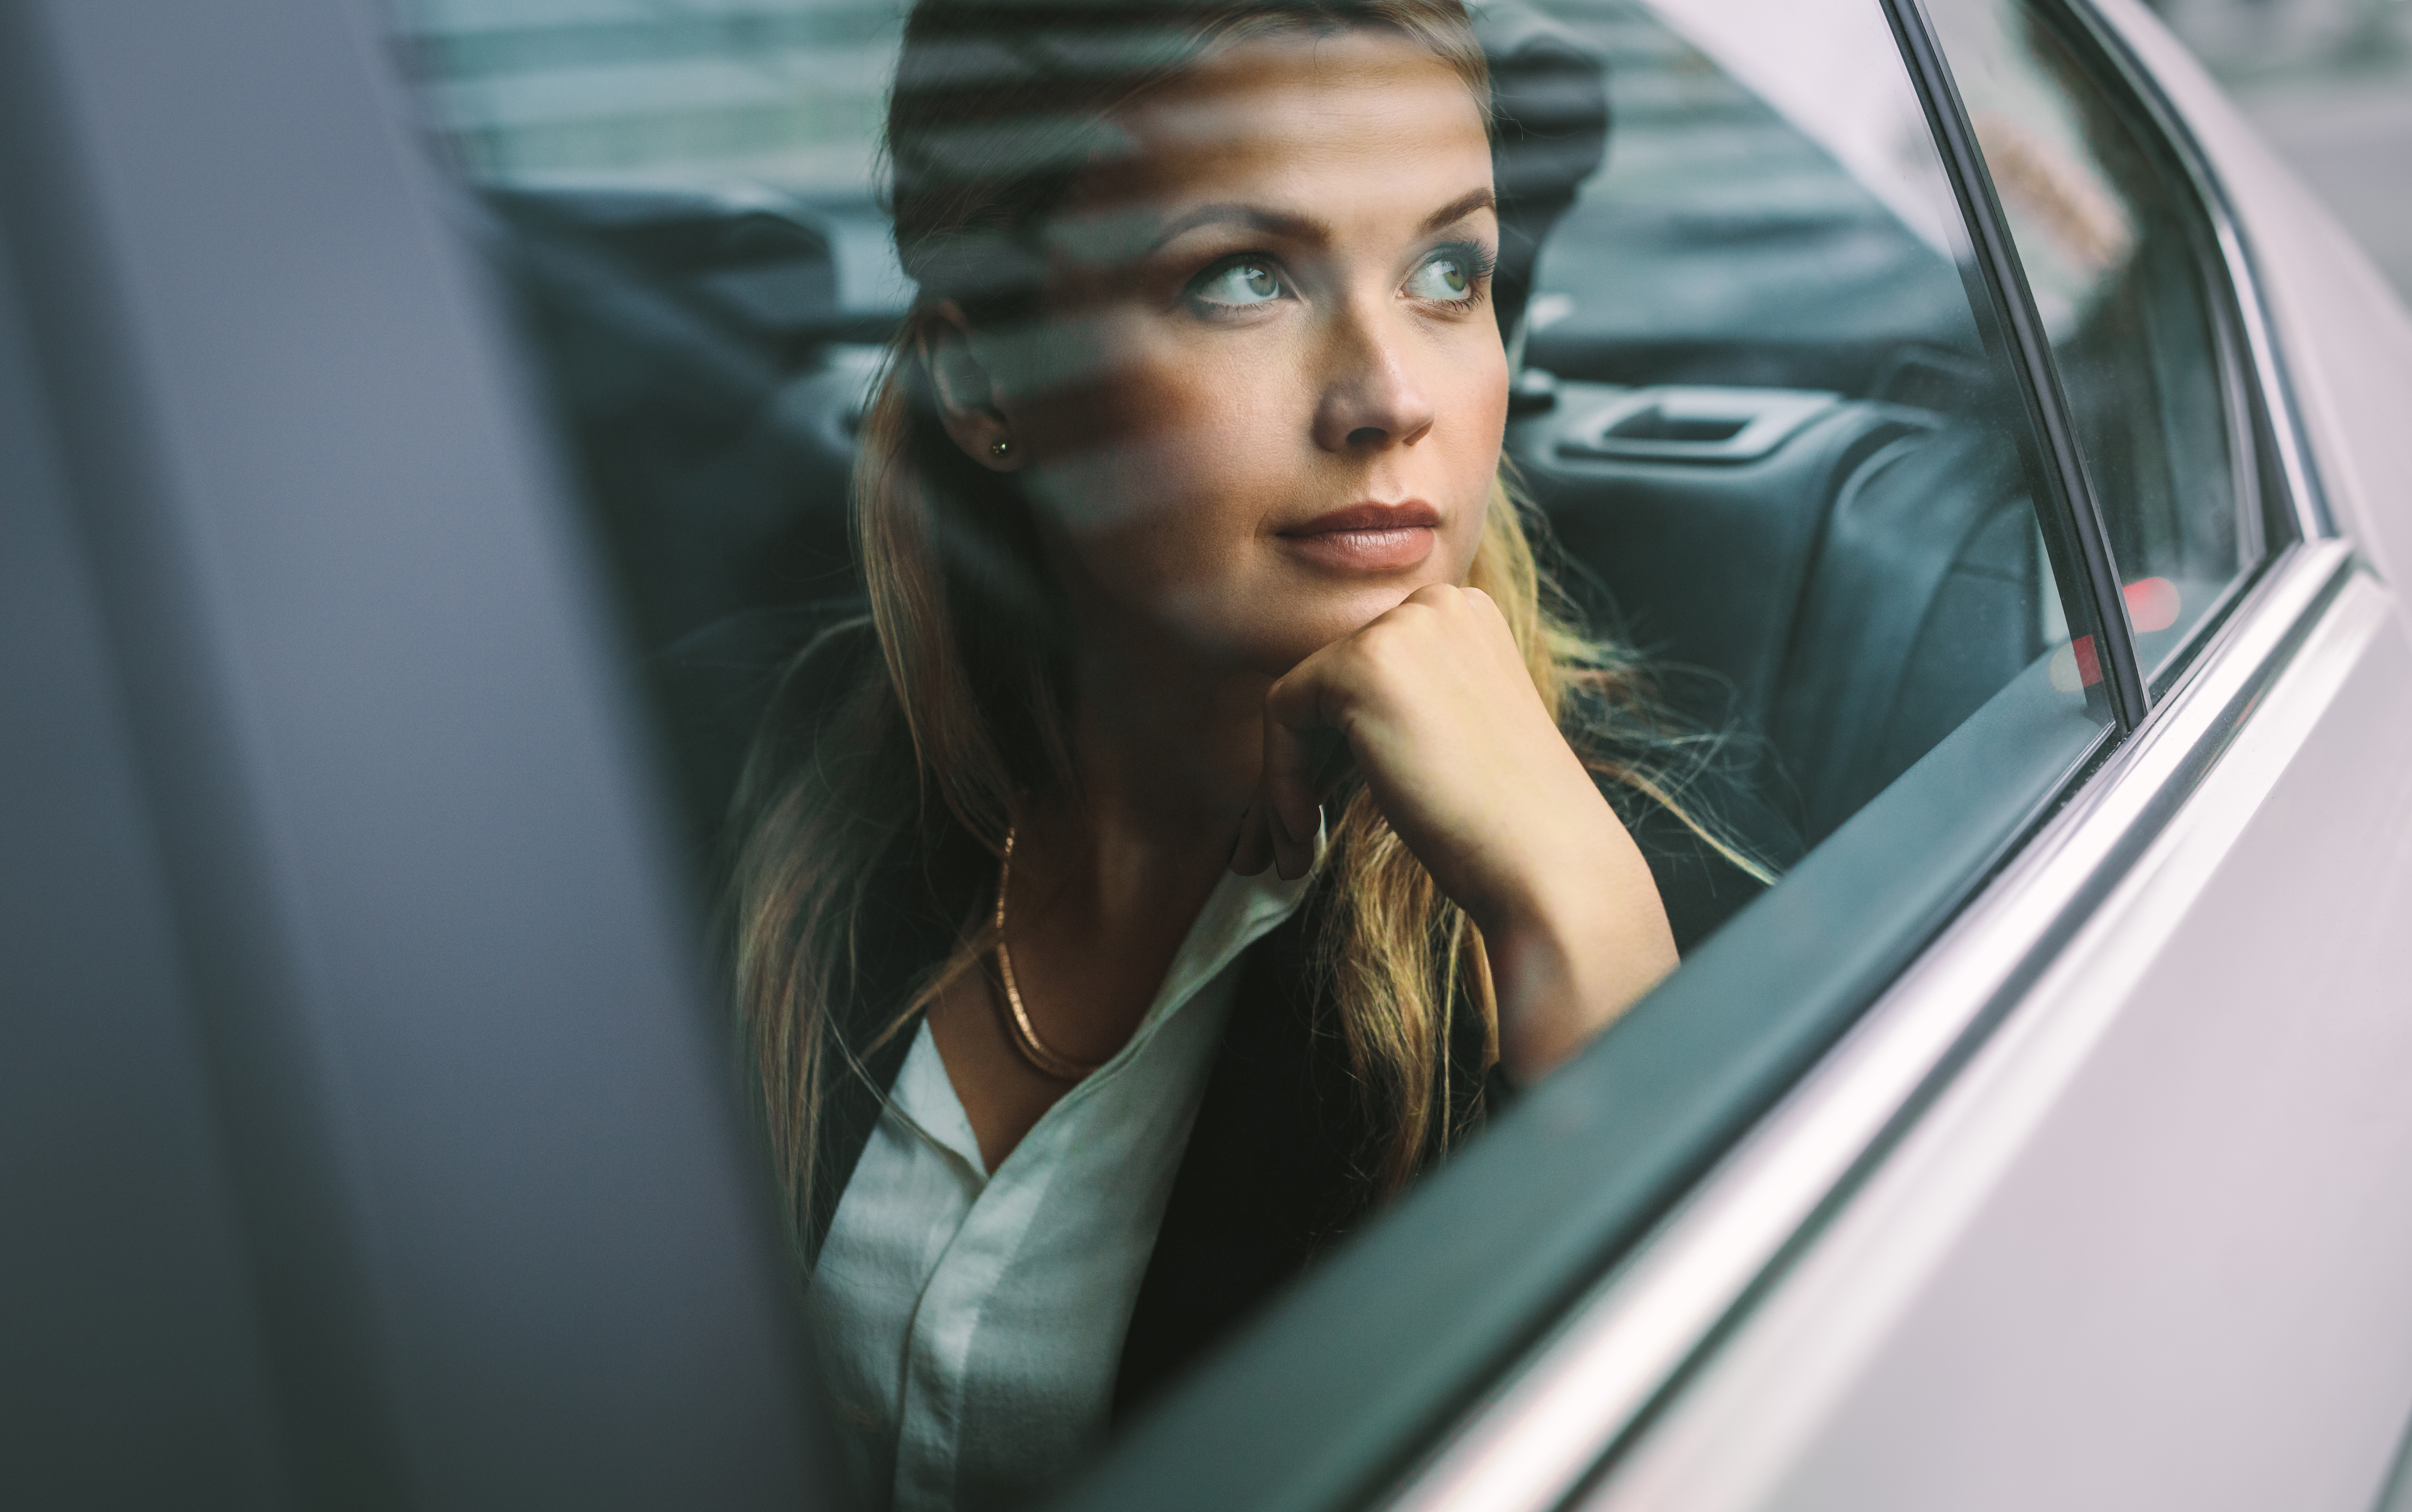 Mujer en Automóvil | Fuente: Shutterstock